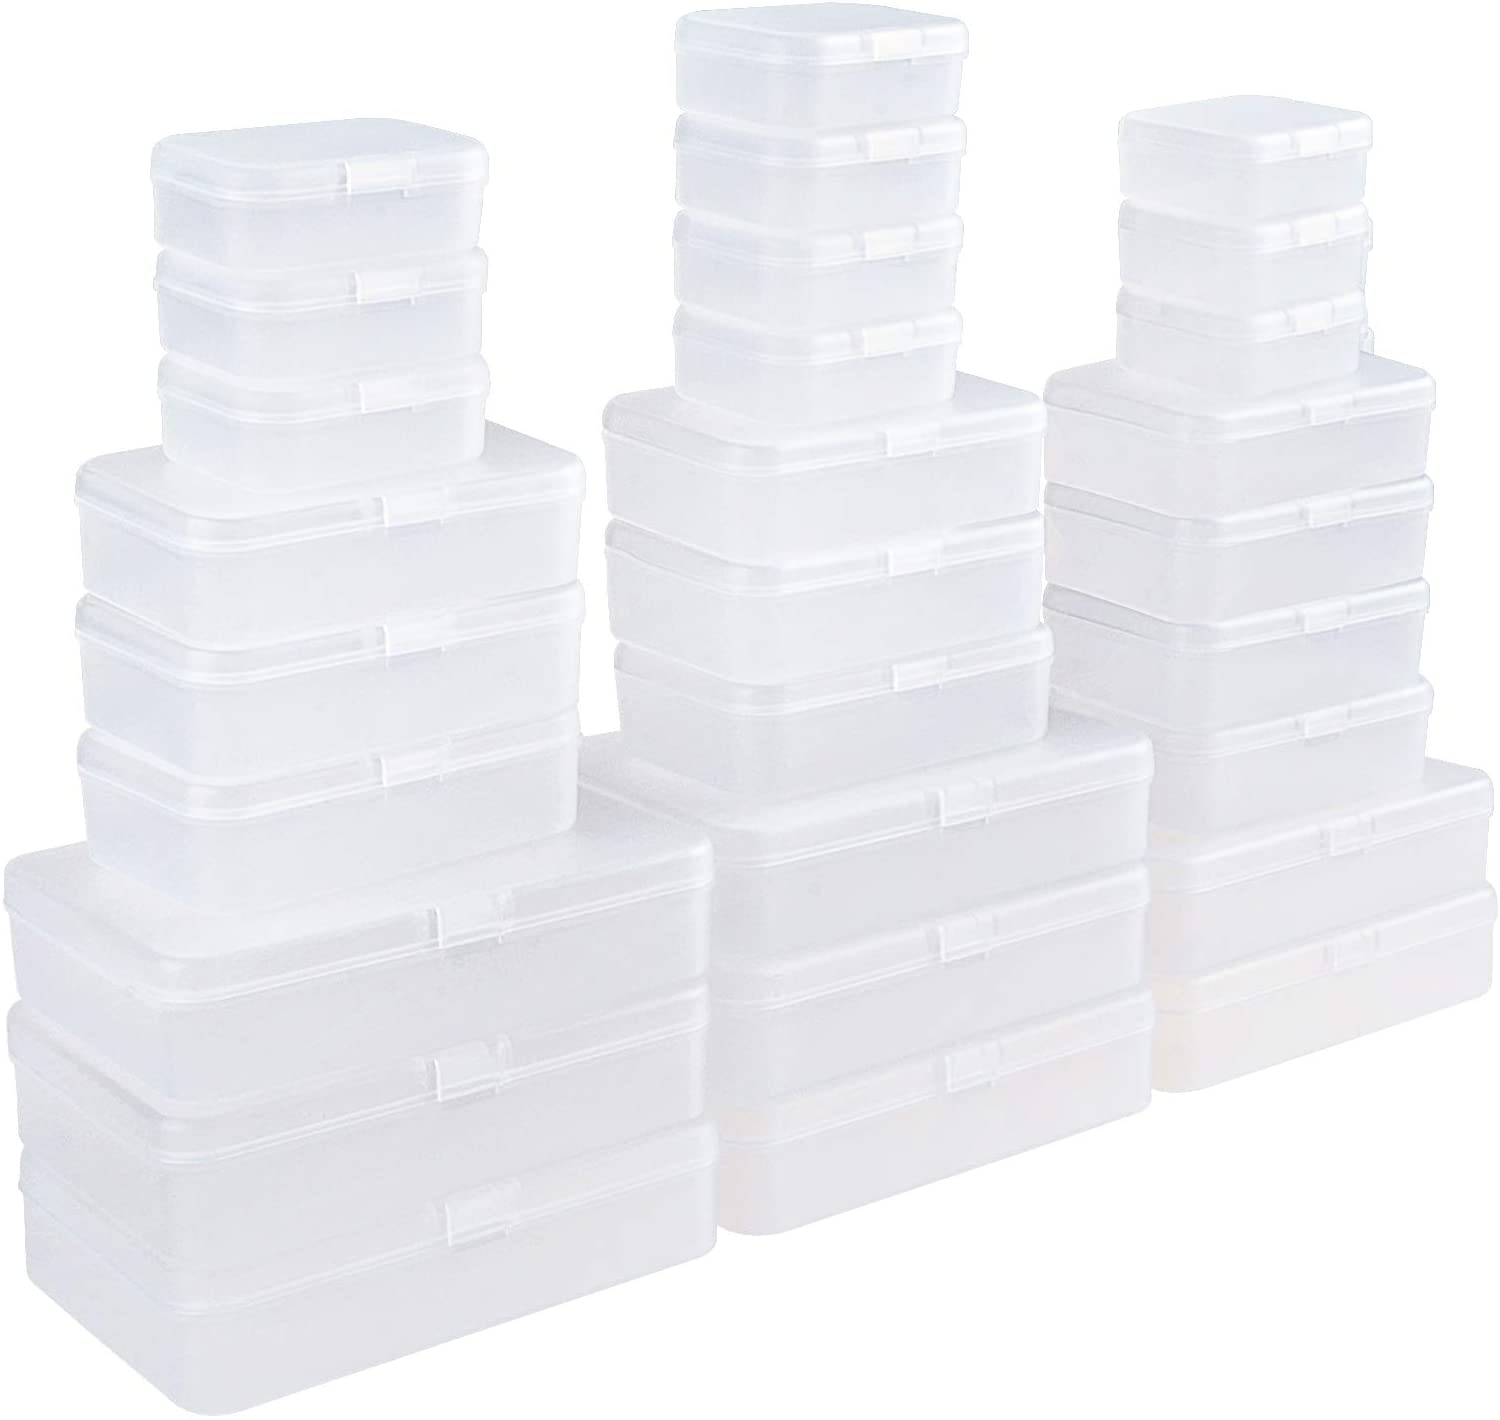 https://www.dontwasteyourmoney.com/wp-content/uploads/2022/04/ljy-assorted-sizes-latching-lids-small-plastic-storage-bins-28-piece-small-plastic-storage-bins.jpg